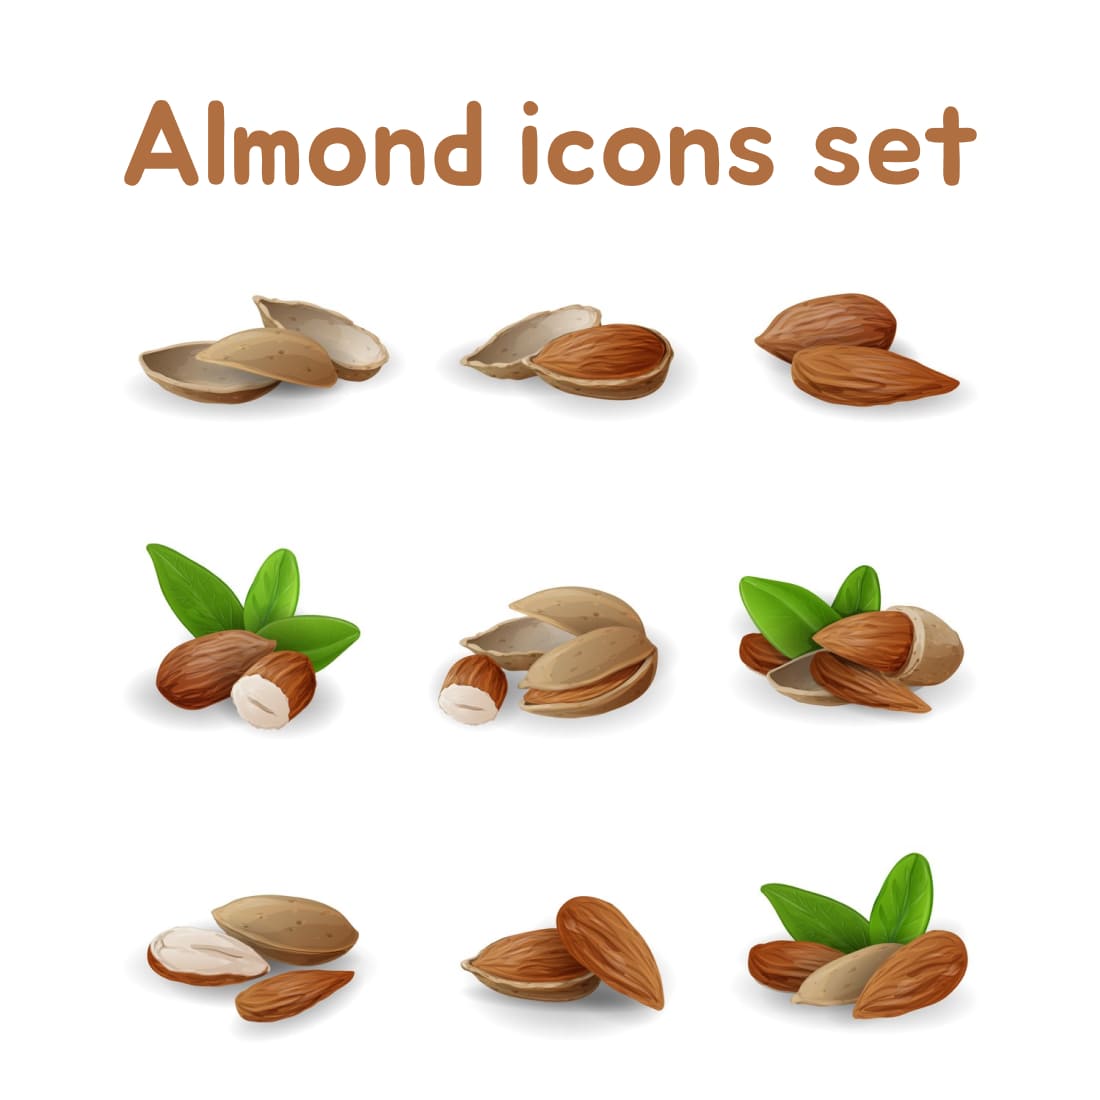 Almond icons set on the white background.